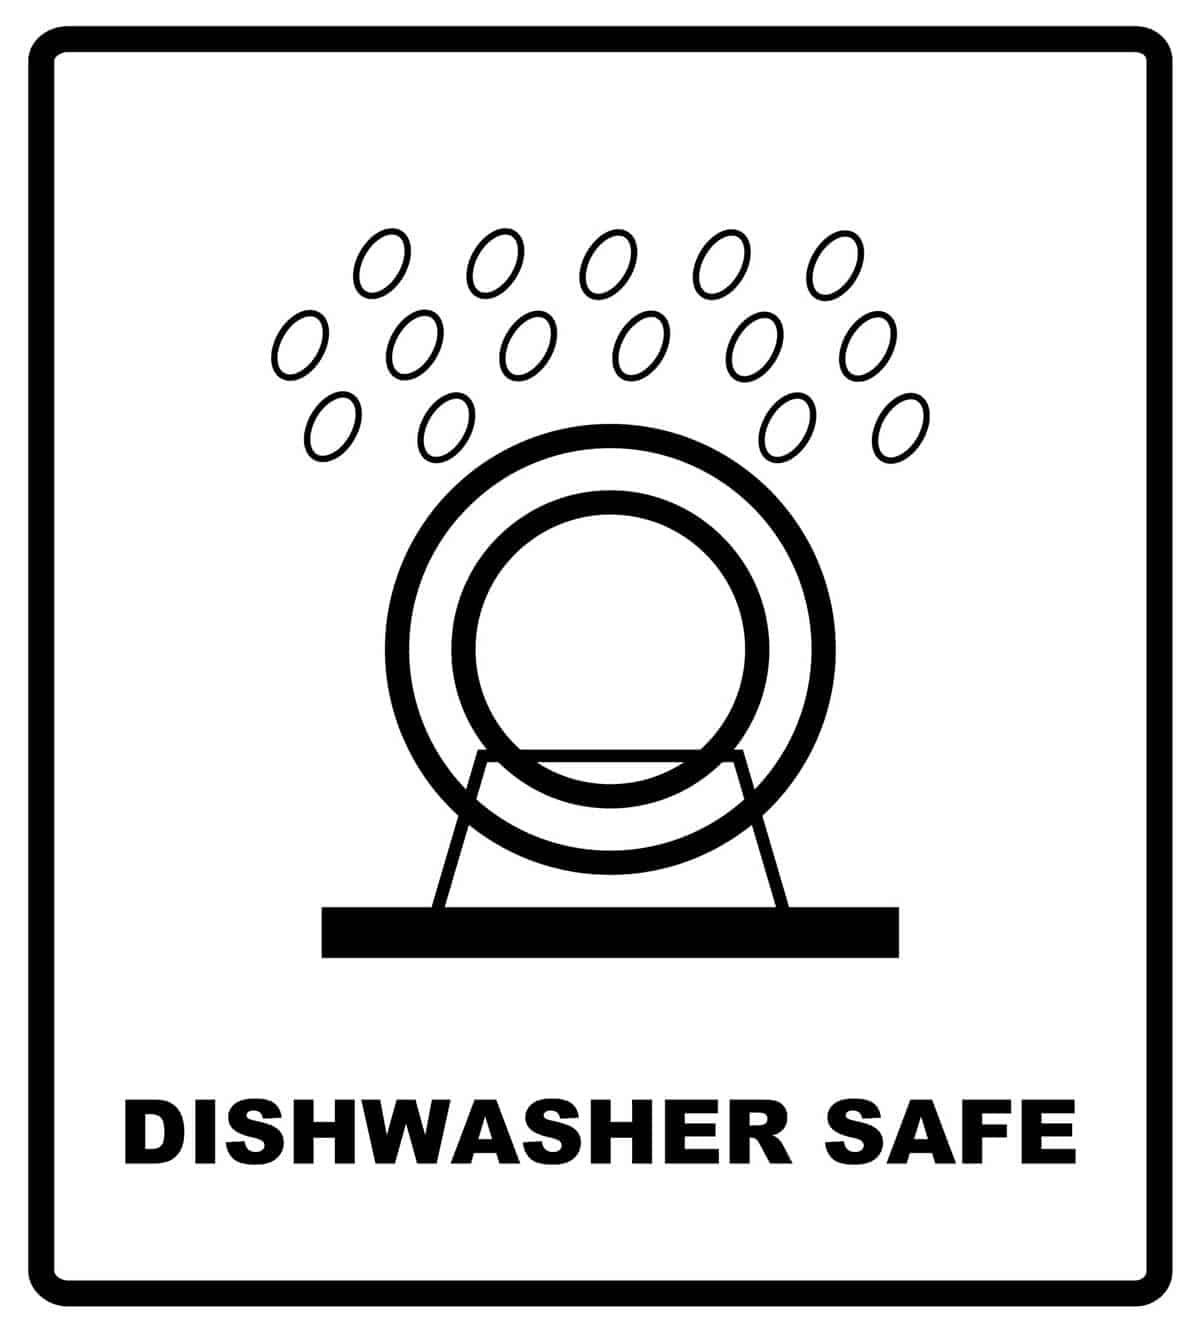 Dishwasher safe symbol